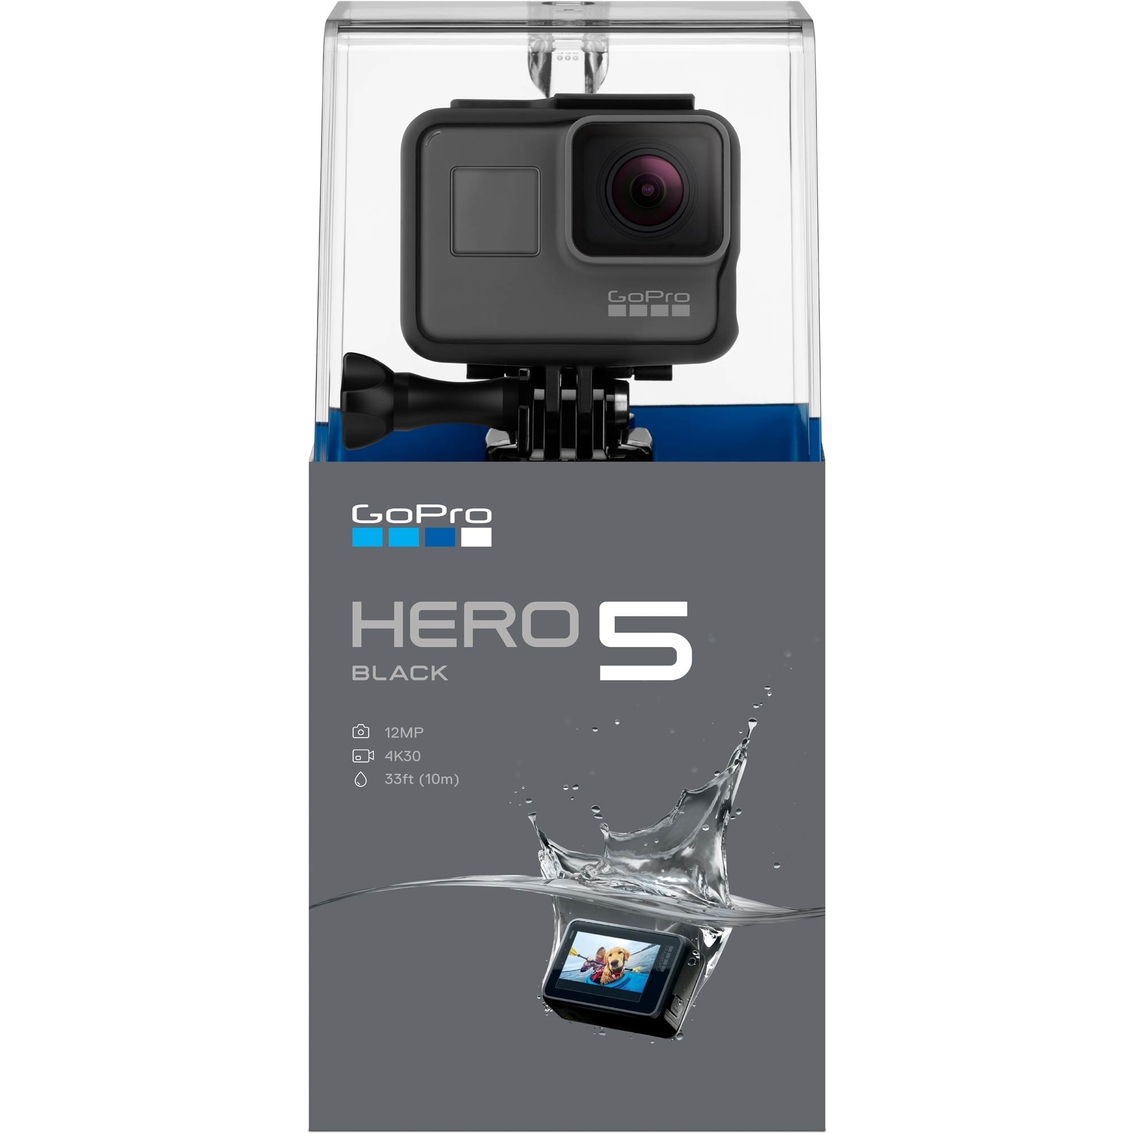 GoPro HERO5 Black 12MP Action Camera